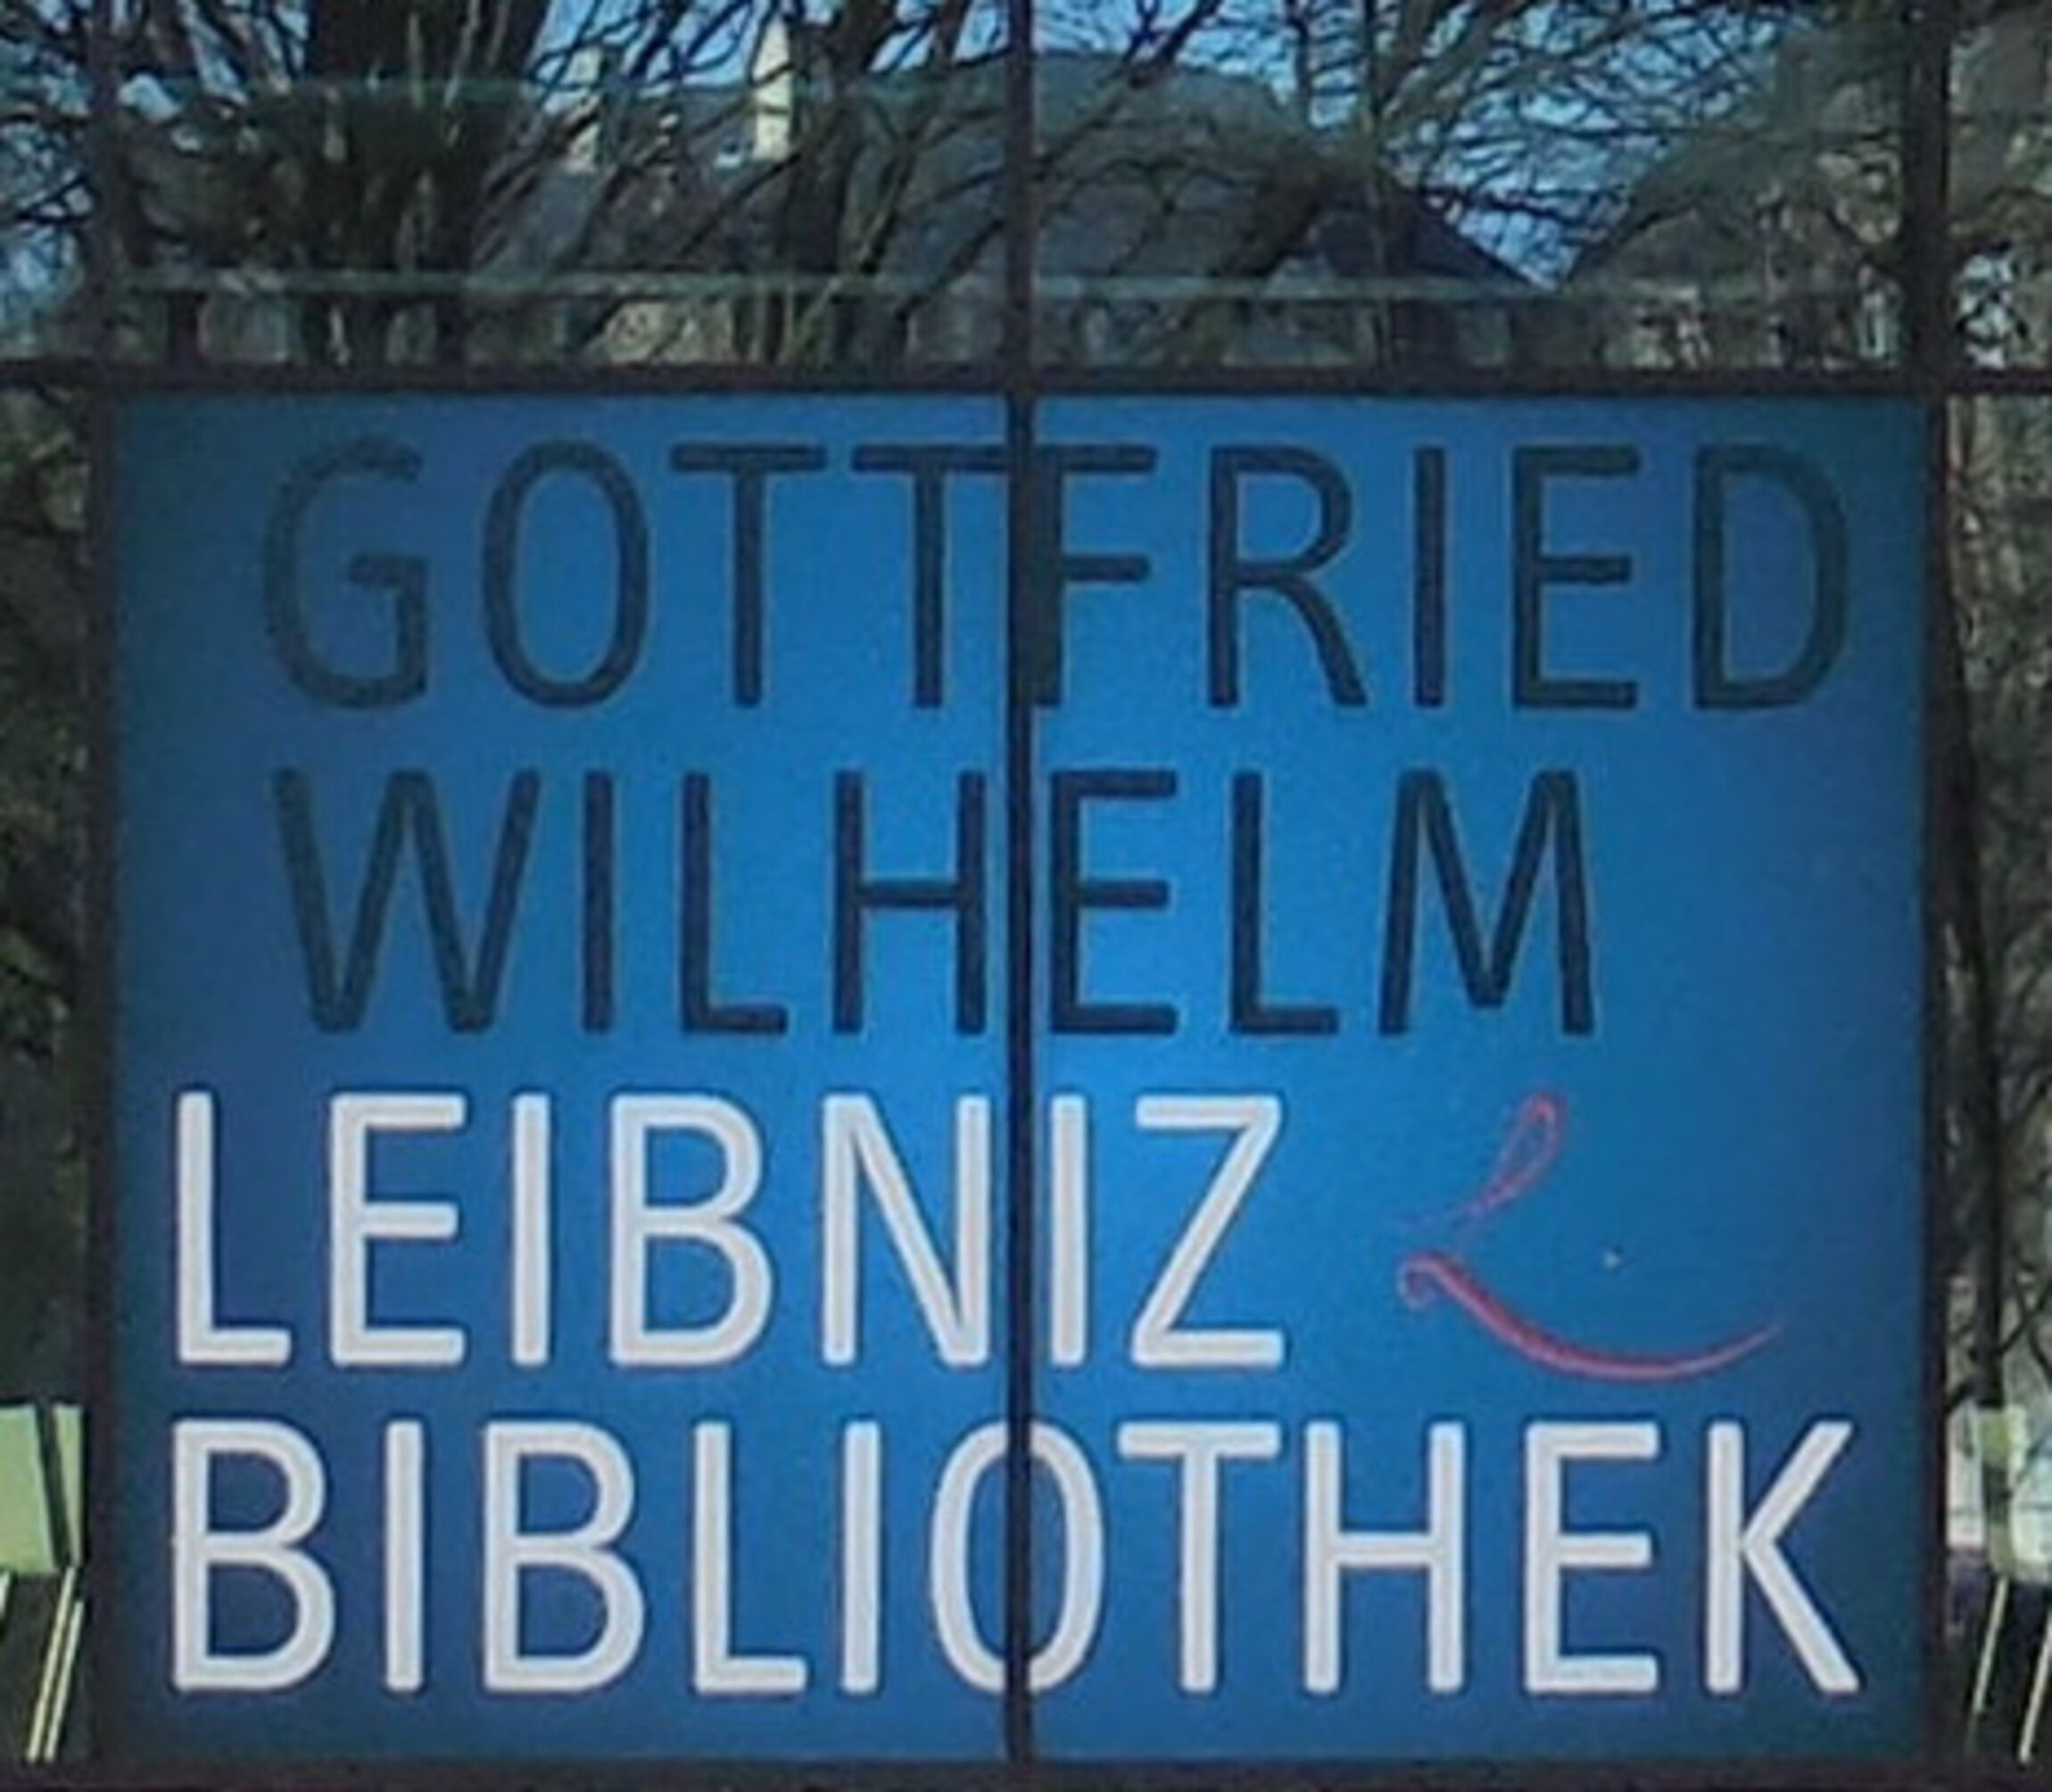 Leibnitzbibliothek - Teaser